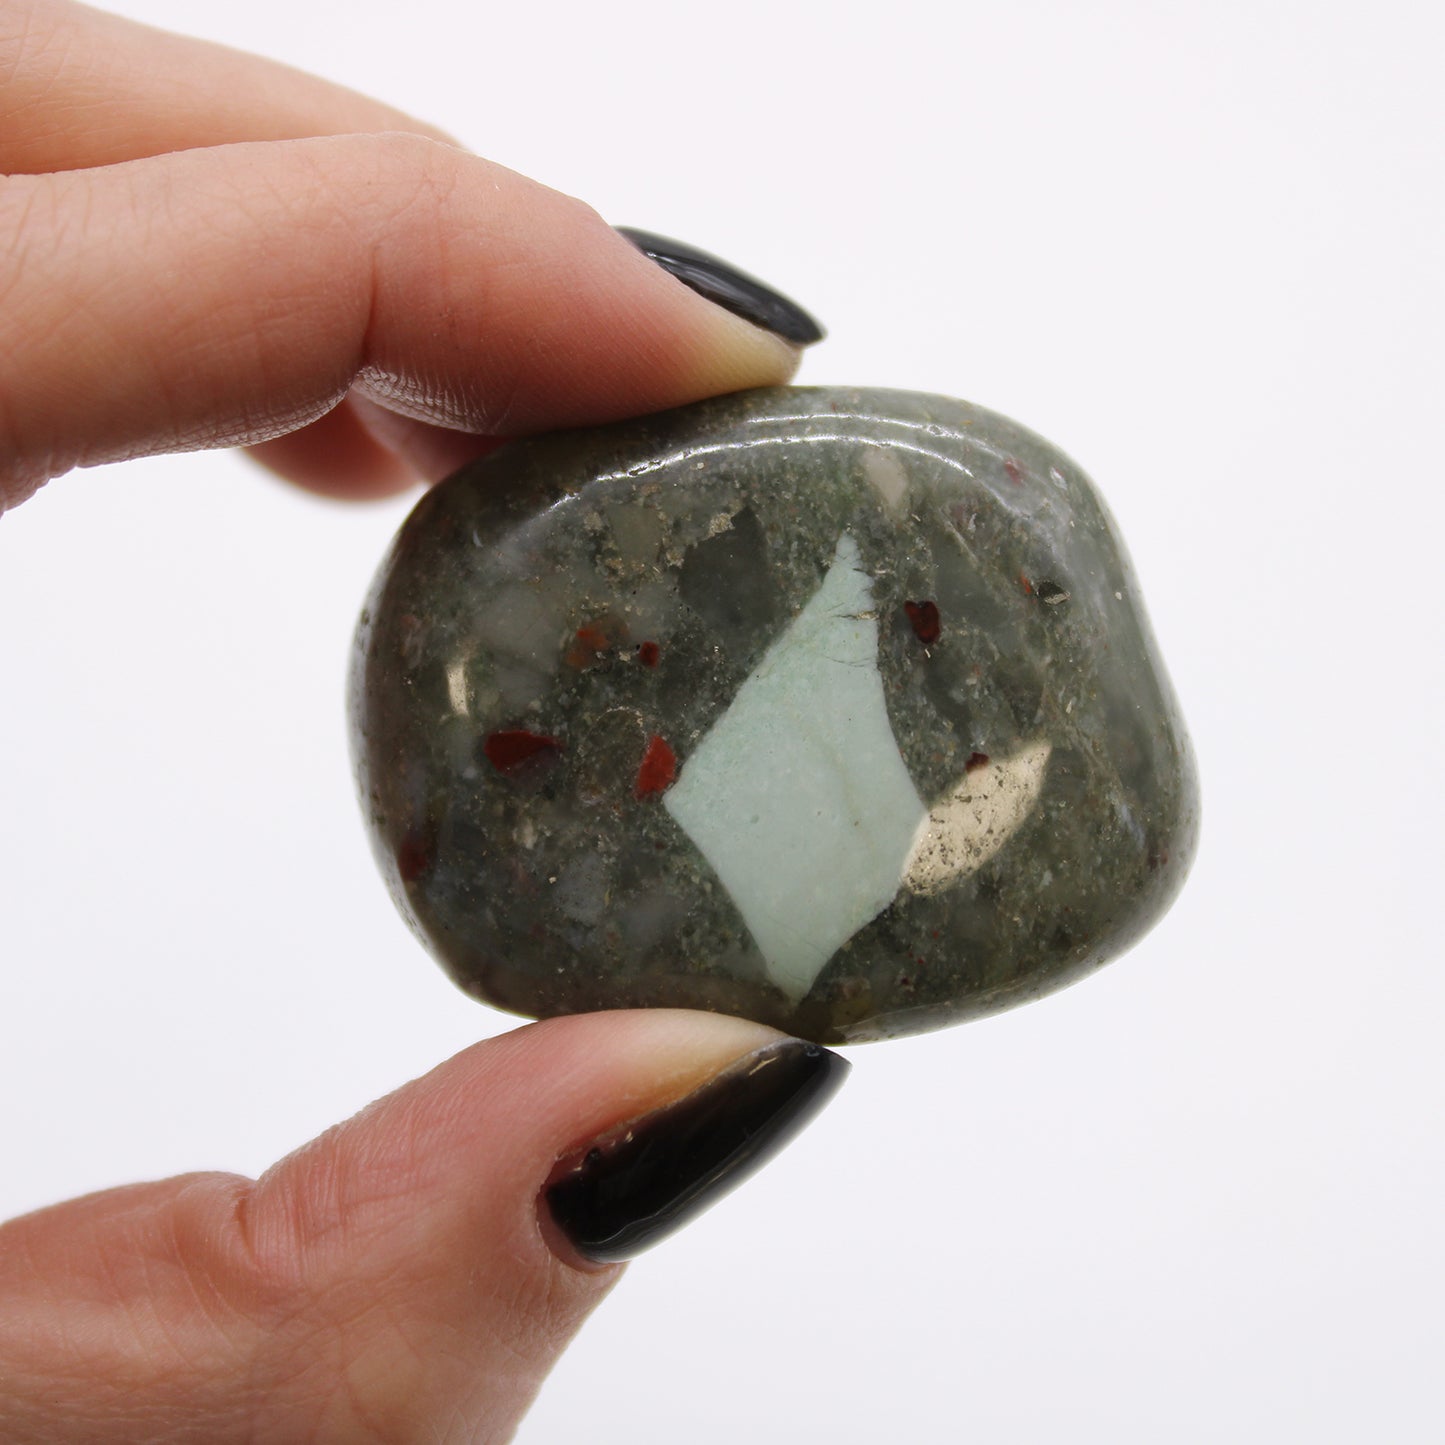 Large African Tumble Stones - Bloodstone - Sephtonite (pack of 6)